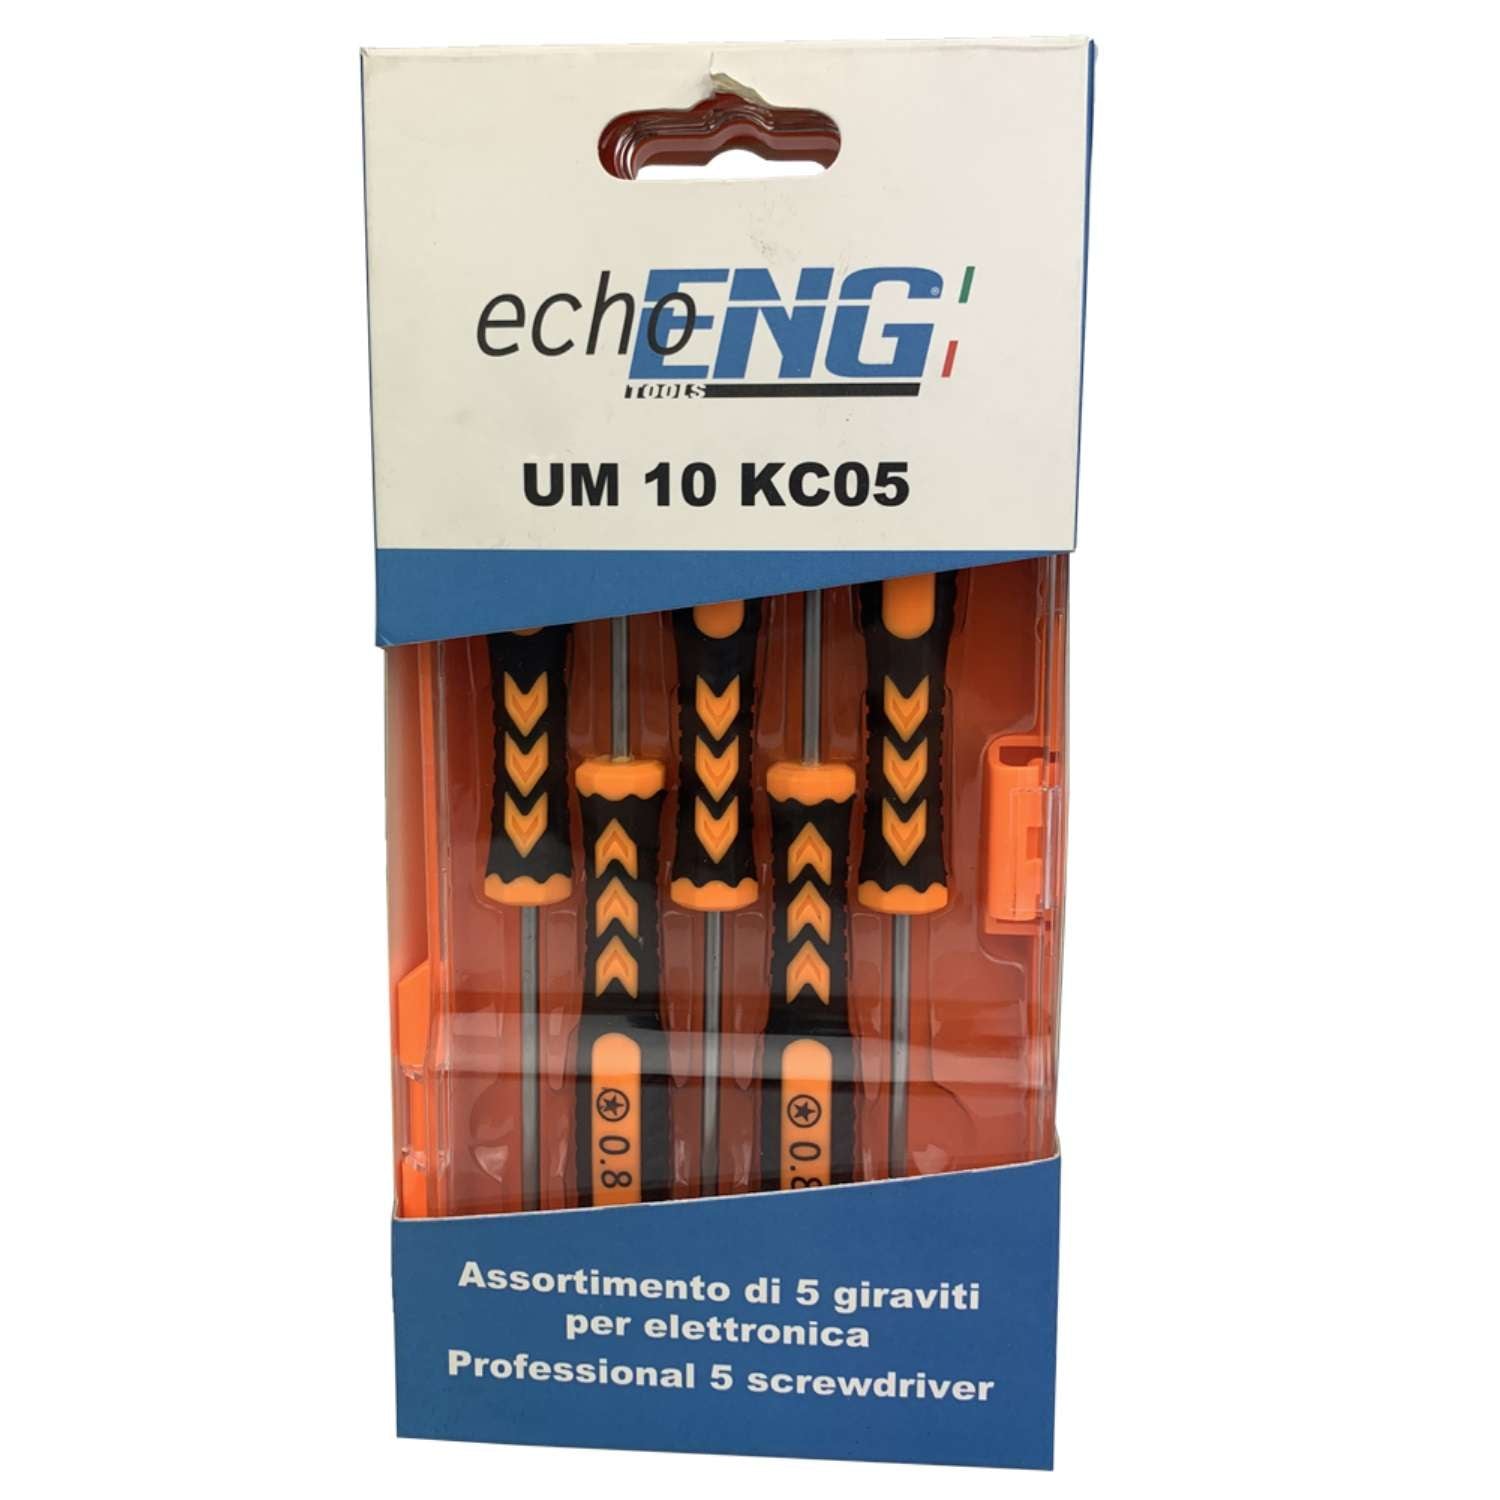 Set of 5 electronics screwdrivers professional UM 10 KC05 echoENG